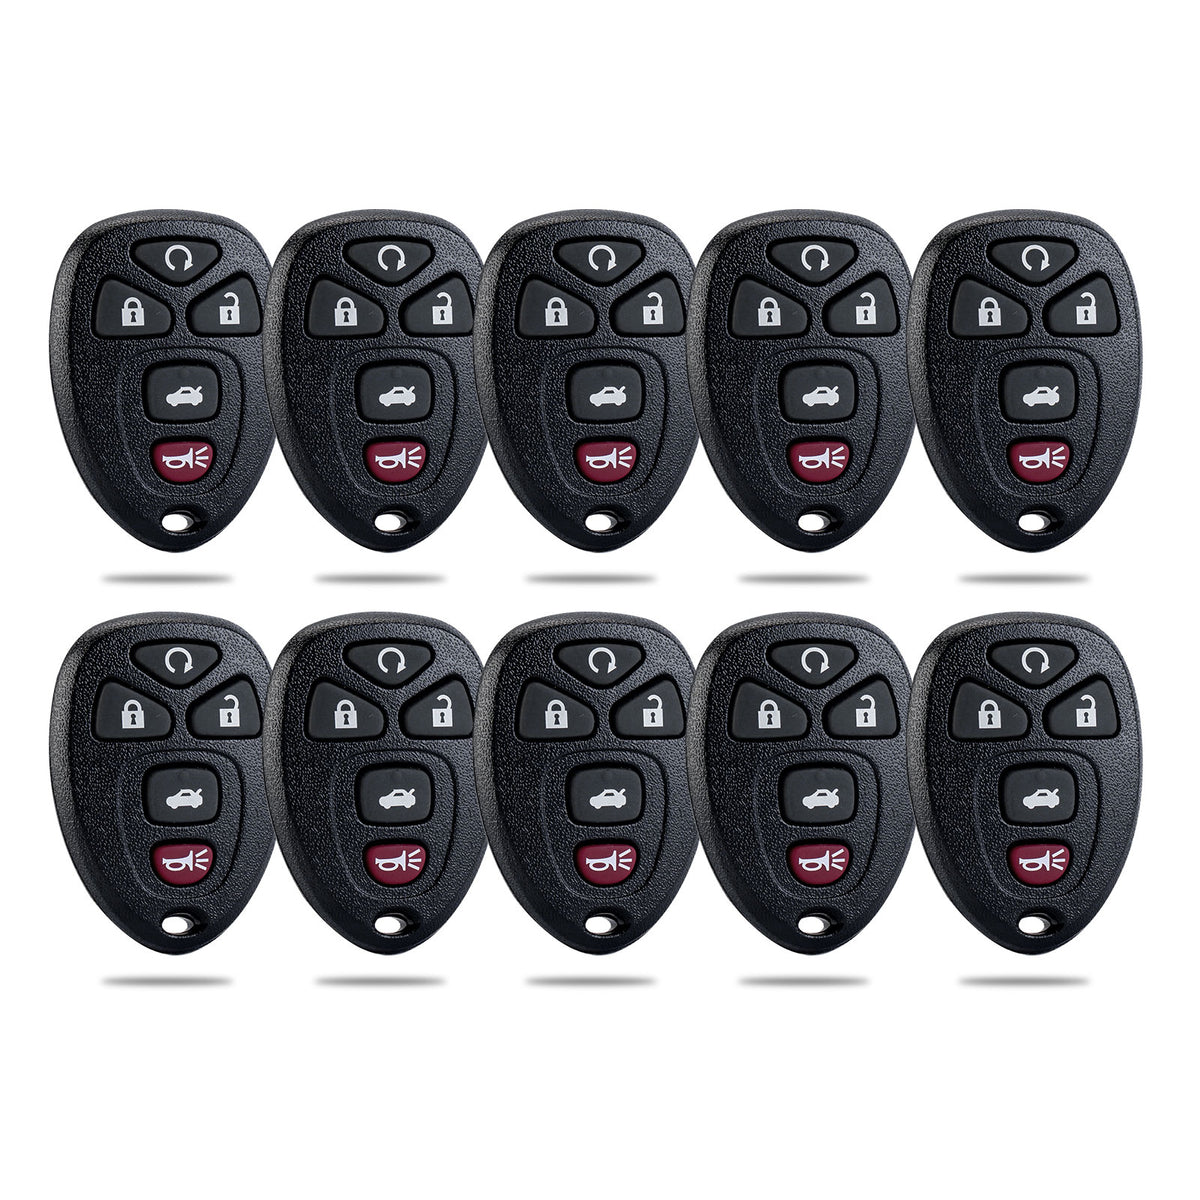 Lots of 10 Keyless Remote Car Key Fob Replacement for Lacrosse Cobalt Malibu G5 G6 Grand Prix Aura Sky 5 Button Remote KOBGT04A 22733524